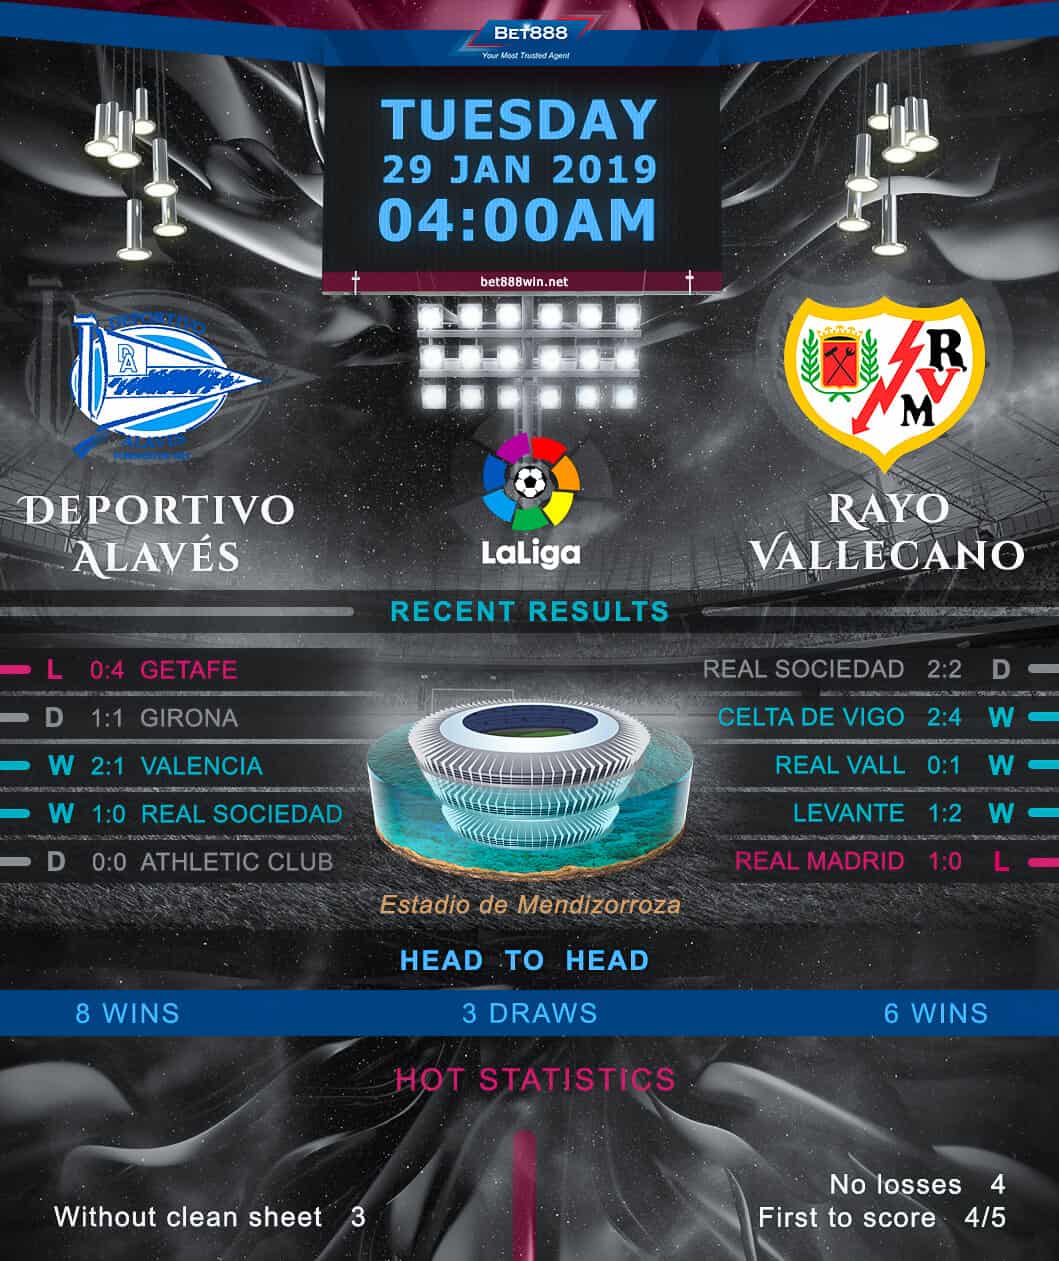 Deportivo Alaves vs Rayo Vallecano 29/01/19